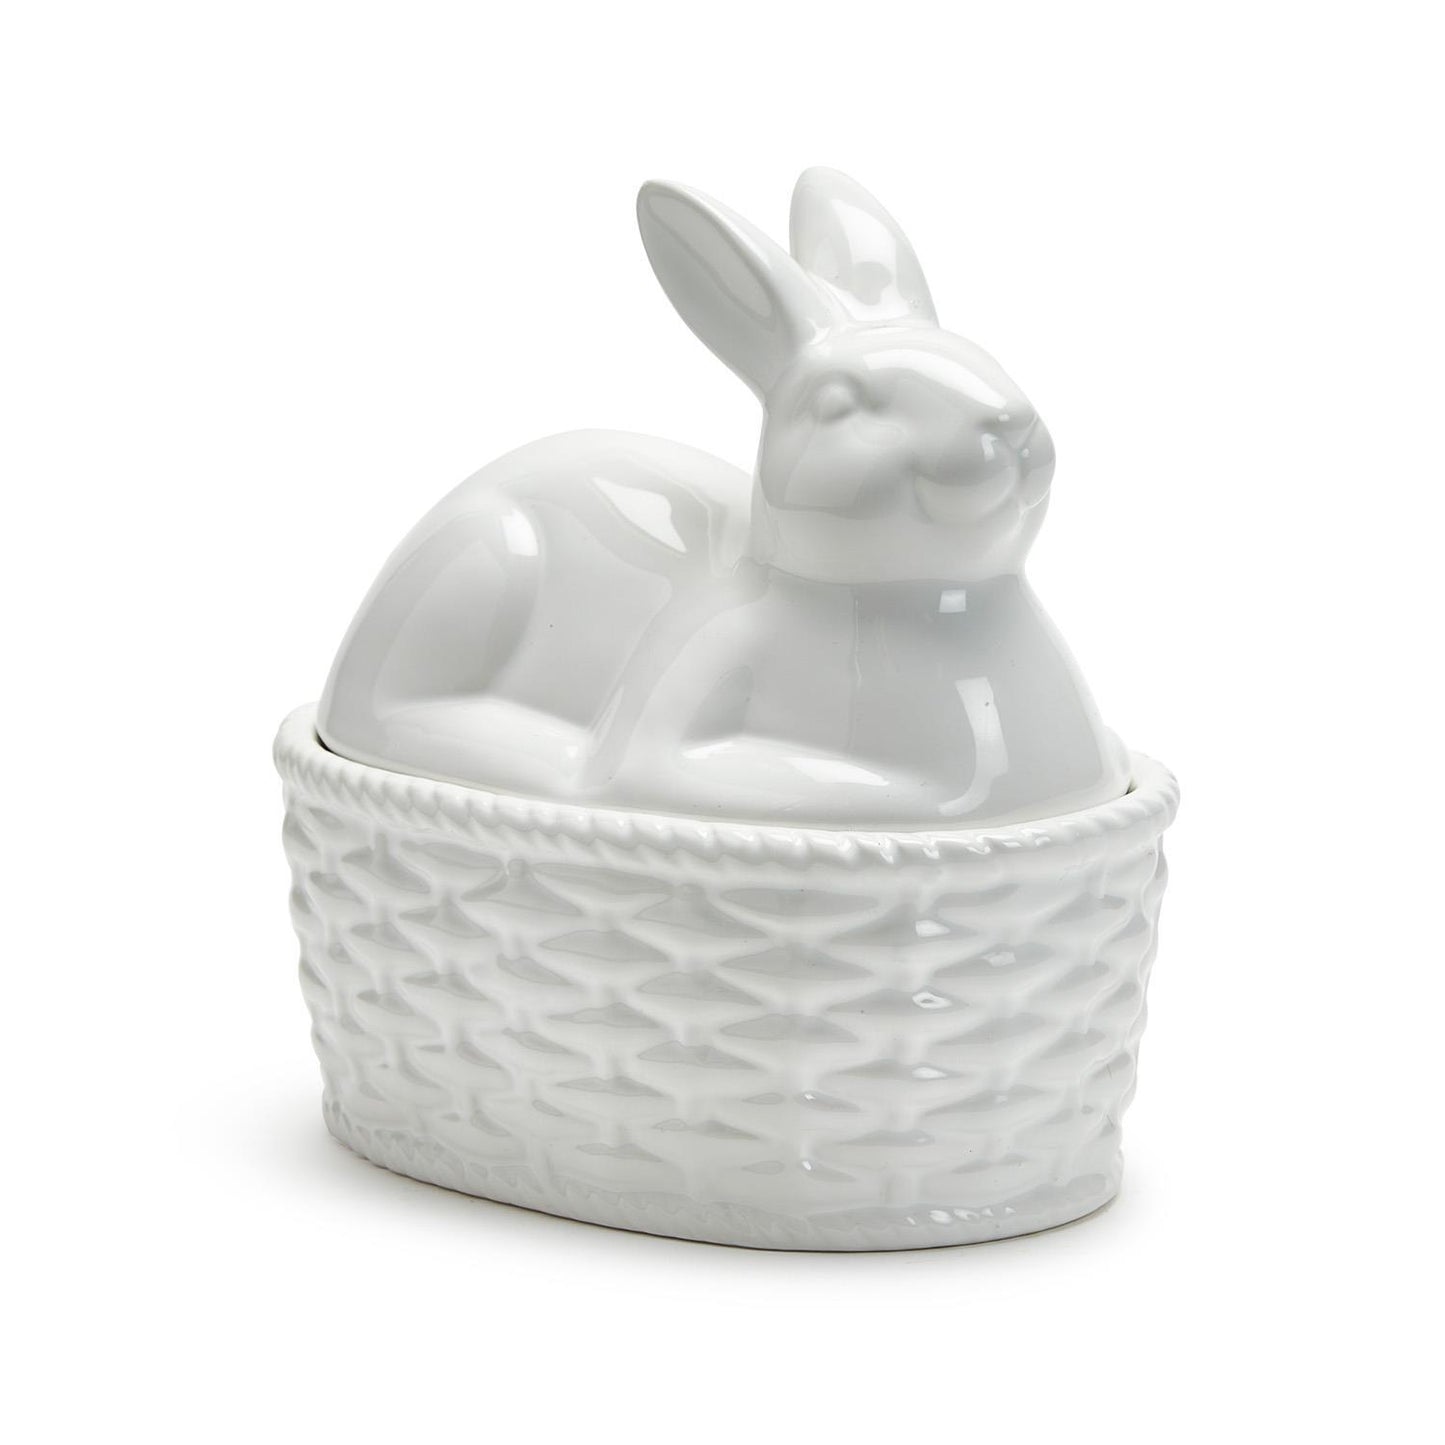 Hoppy Easter Bunny Covered Candy Box Tidbit Dish